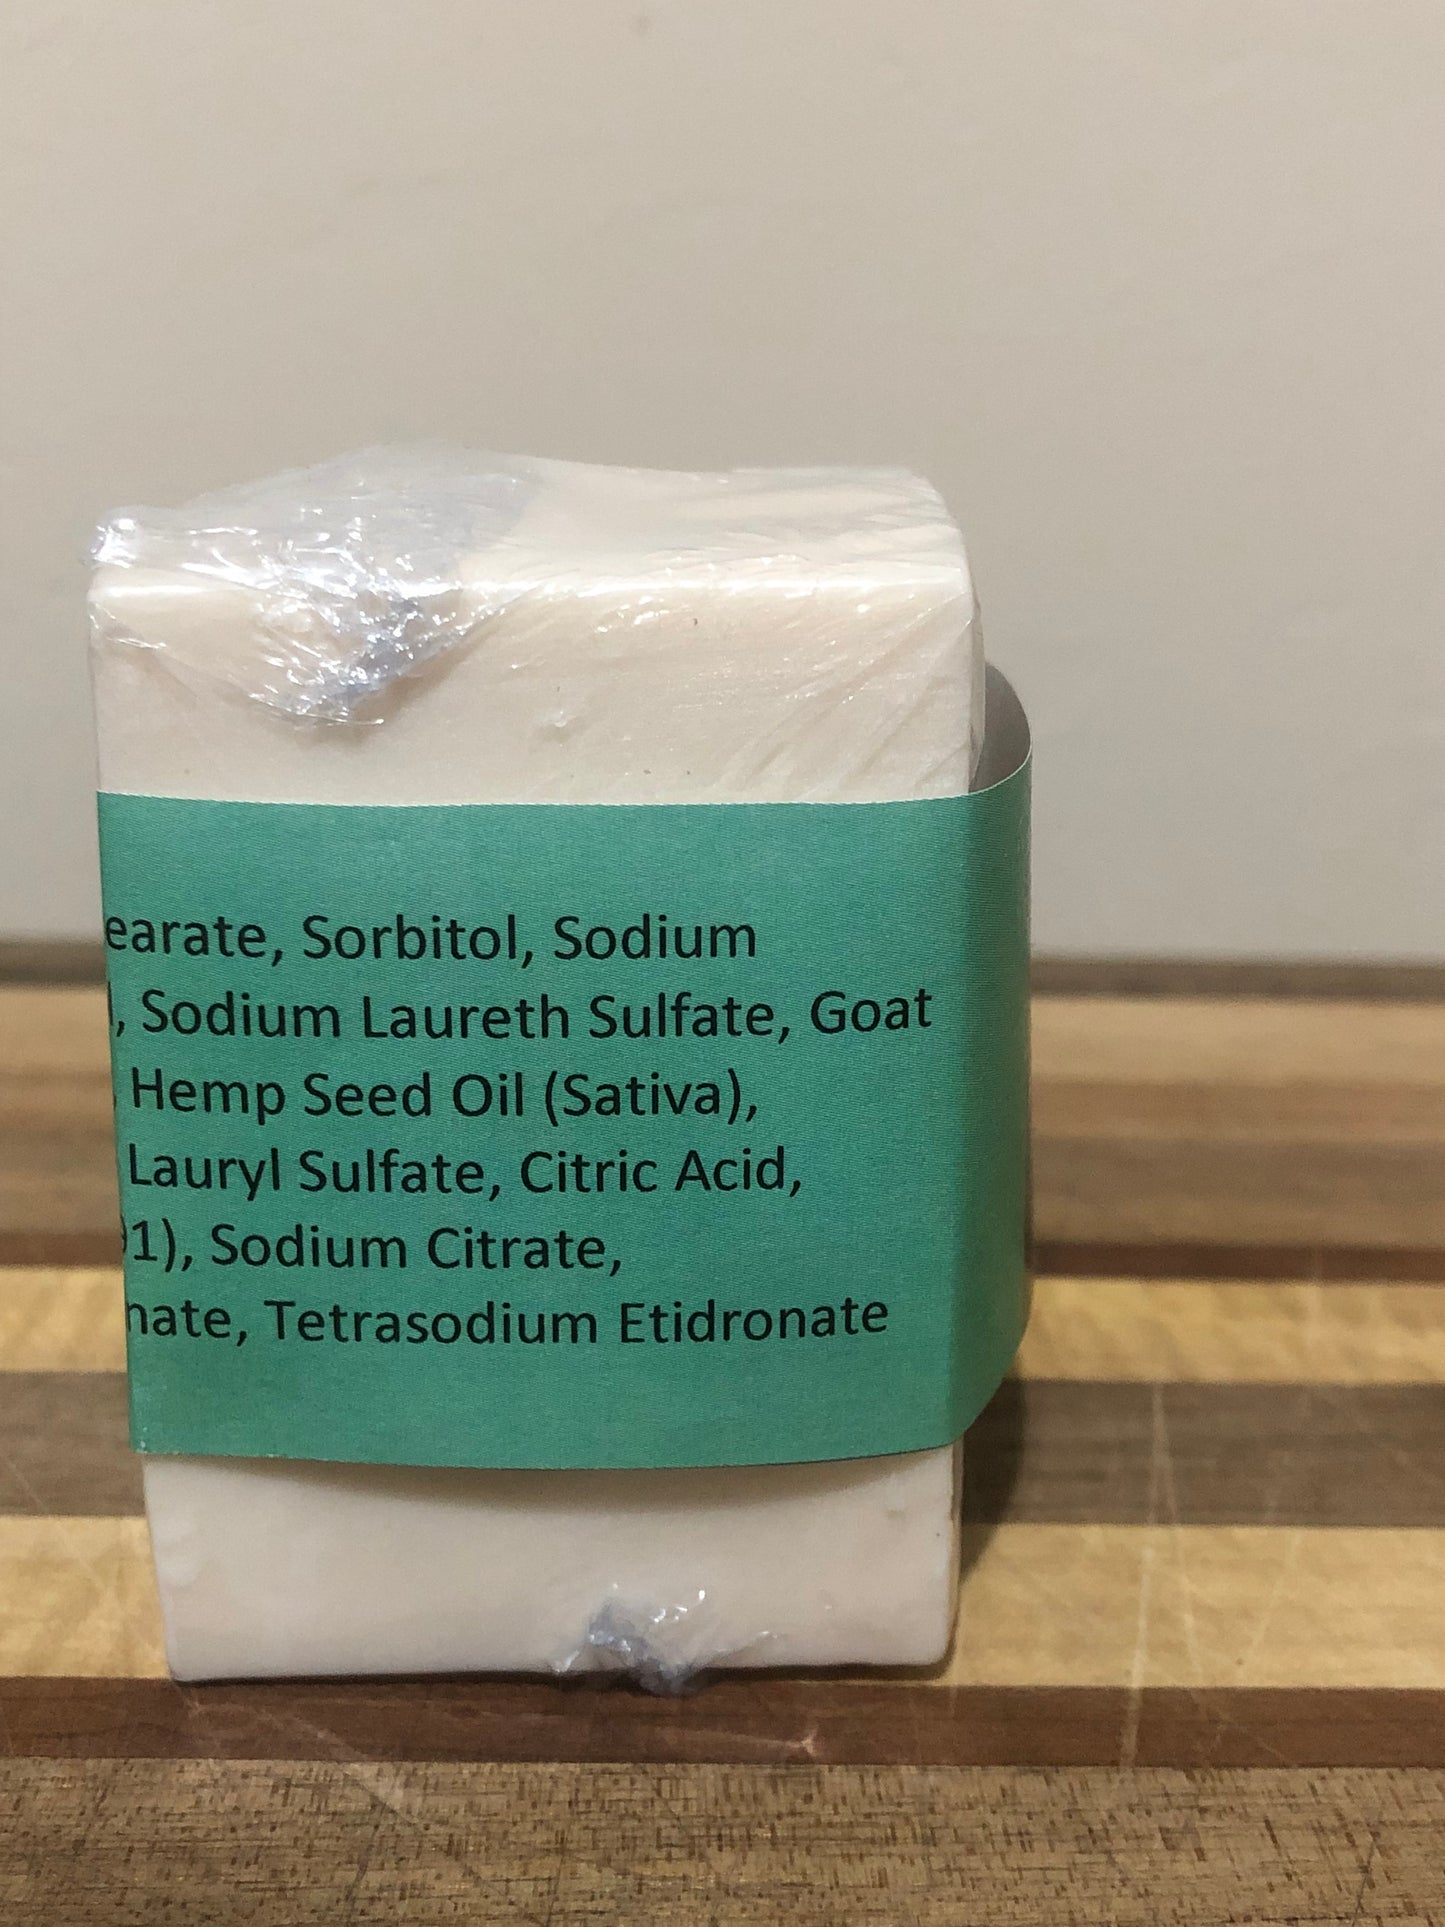 Peppermint & Eucalyptus Goat's Milk, Hemp Seed Oil and East African Shae Butter Soap